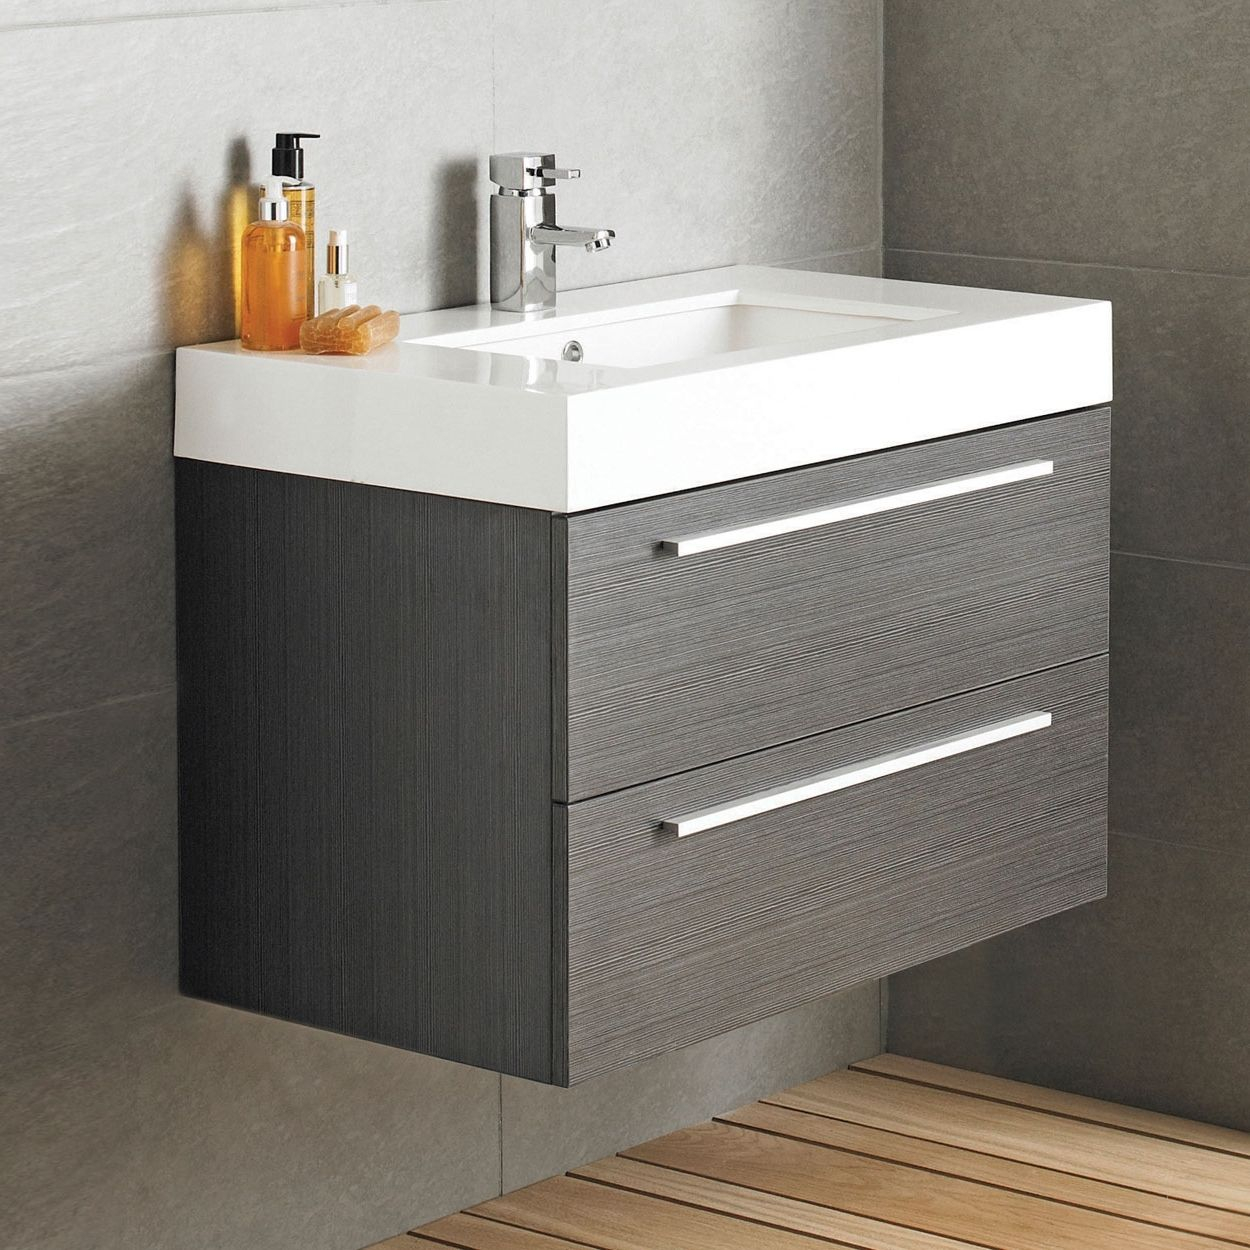 Bathroom Sink Units Homebase Stribal Design Interior Home intended for size 1250 X 1250